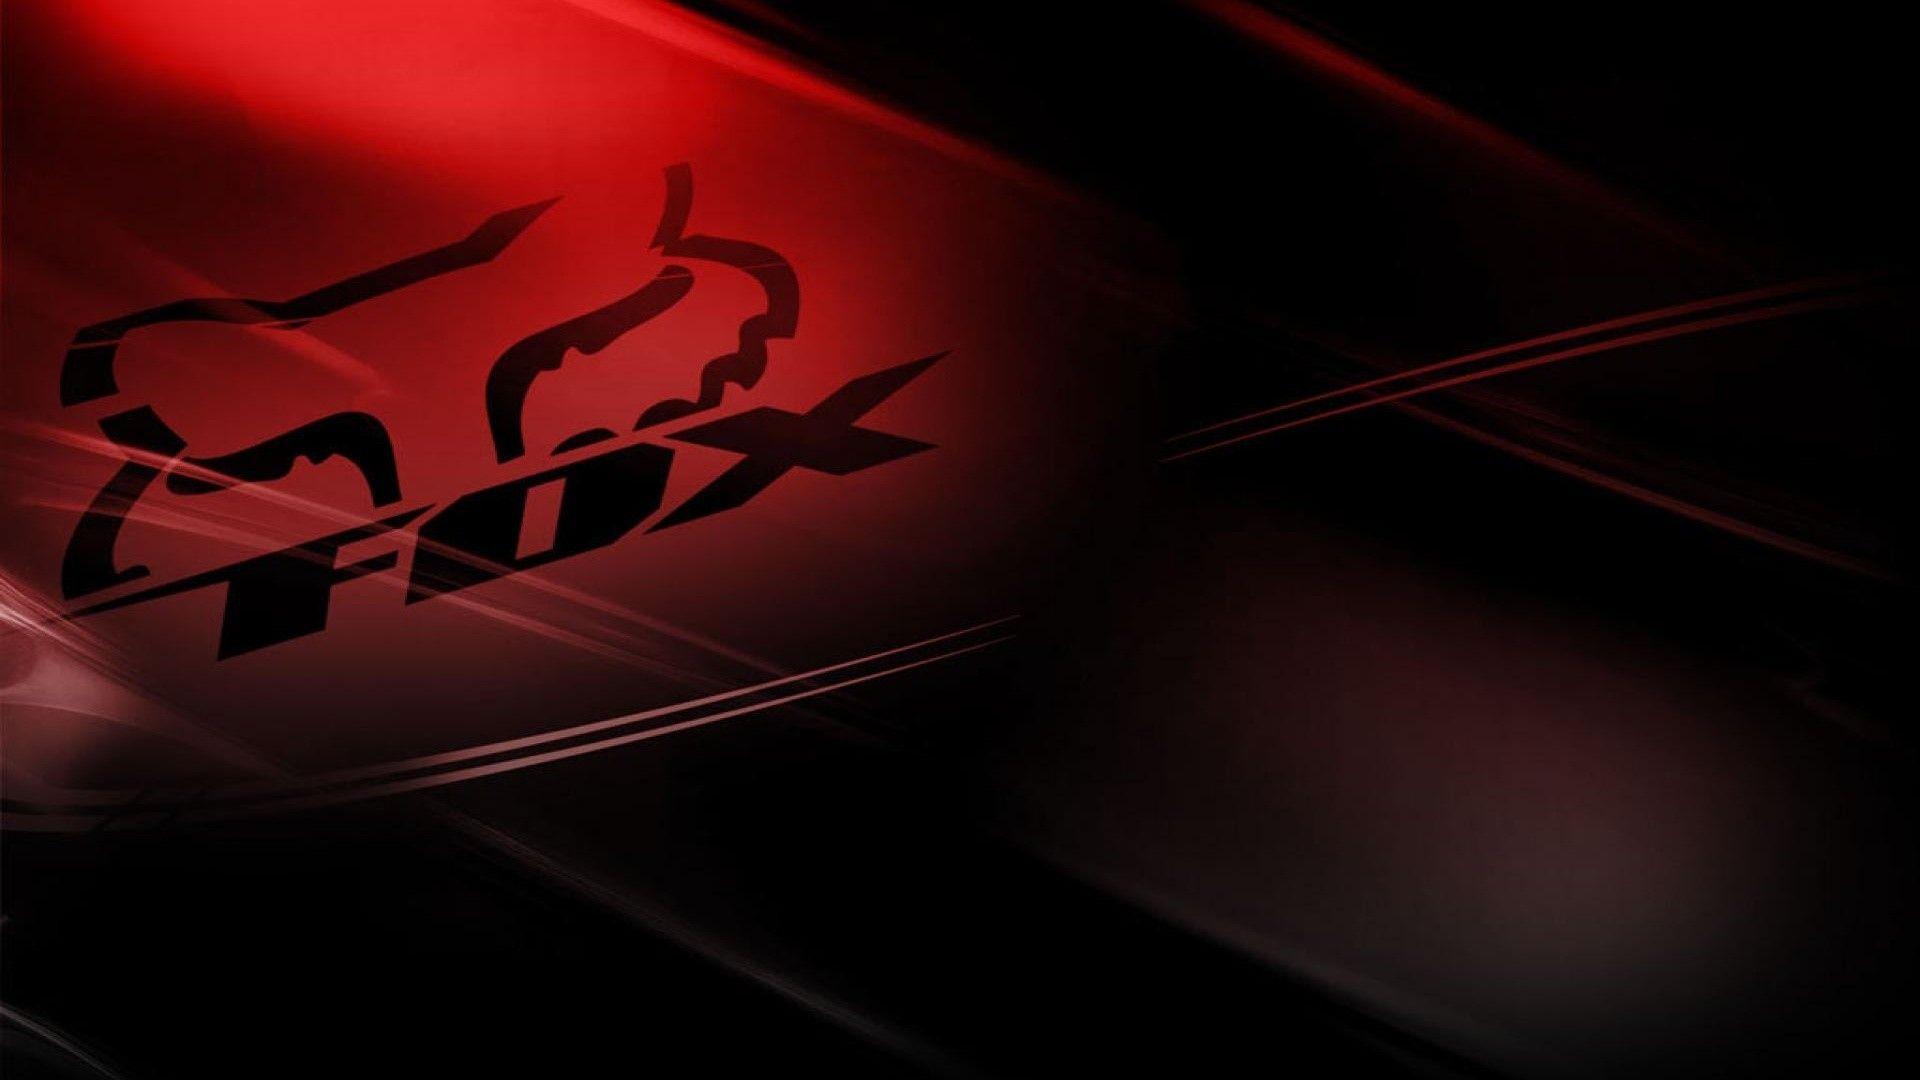 Fox Racing Logo Wallpapers - Top Free Fox Racing Logo Backgrounds ...